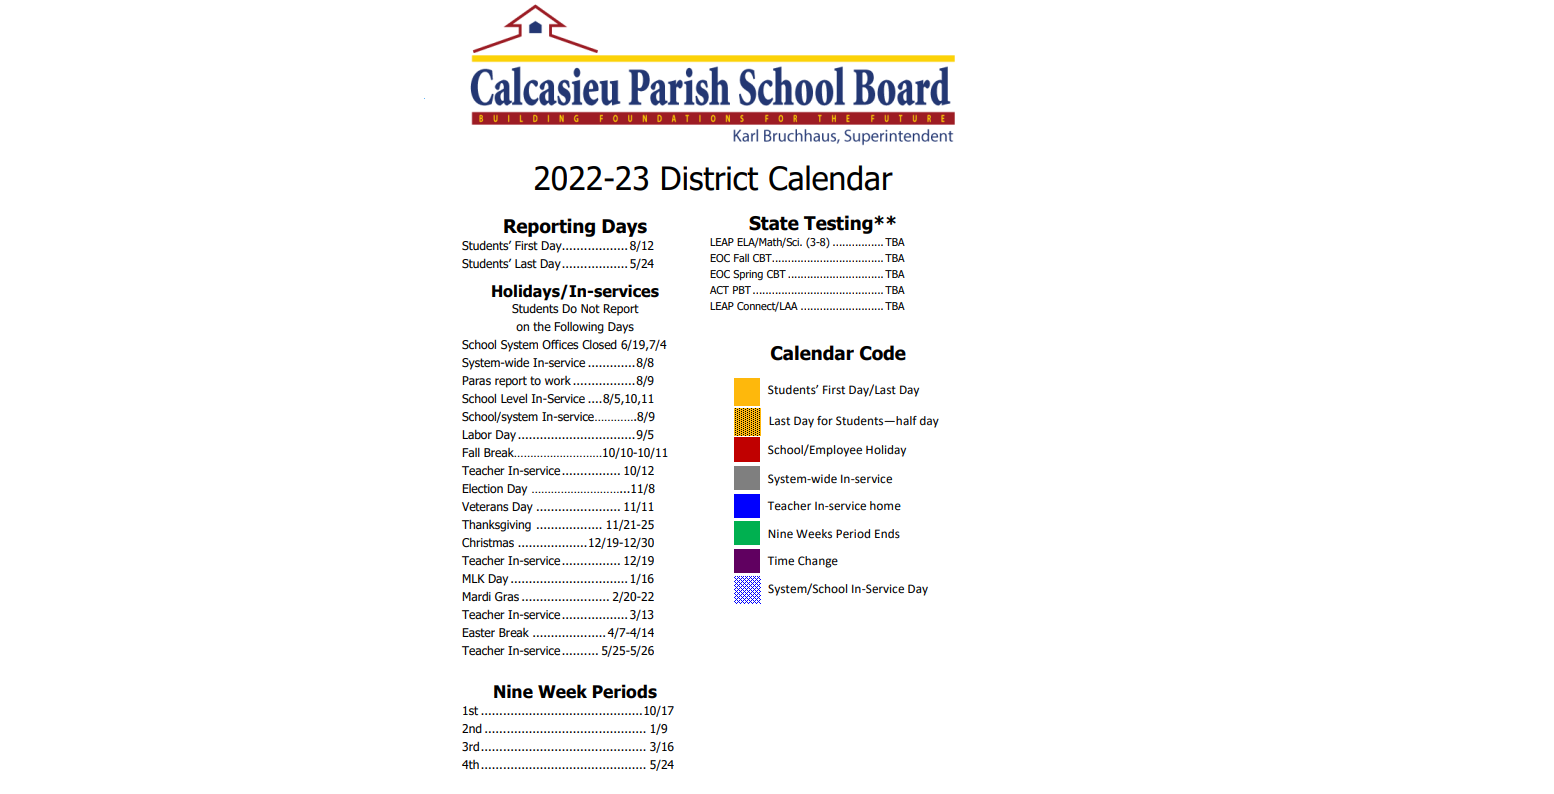 District School Academic Calendar Key for Fairview Elementary School